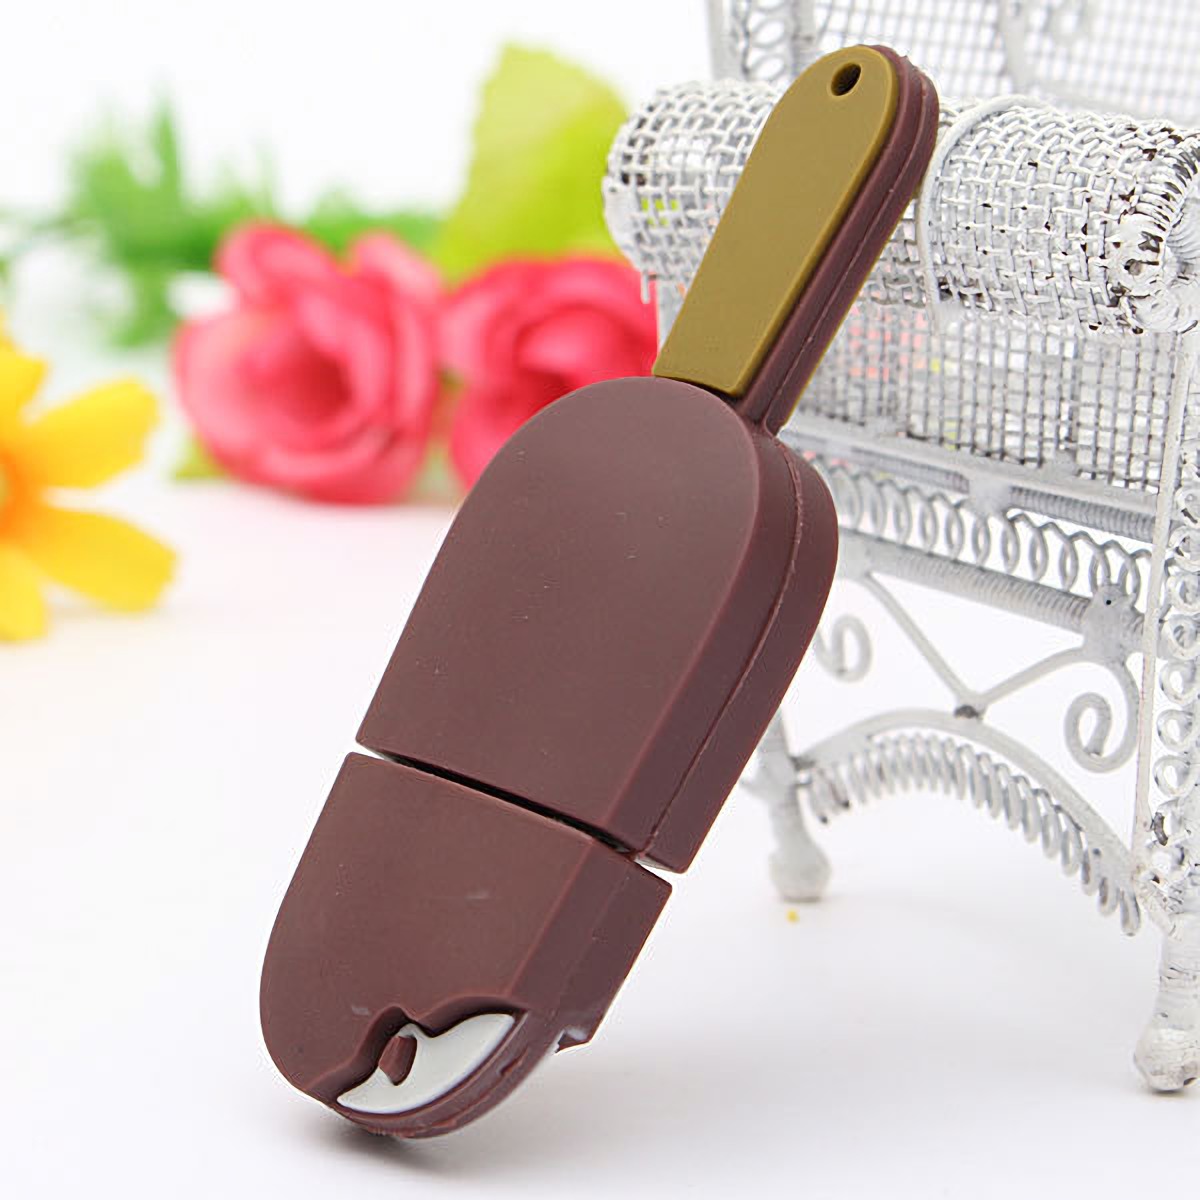 16GB-USB20-Chocolate-Ice-Cream-Model-Flash-Drive-Memory-U-Disk-961651-2